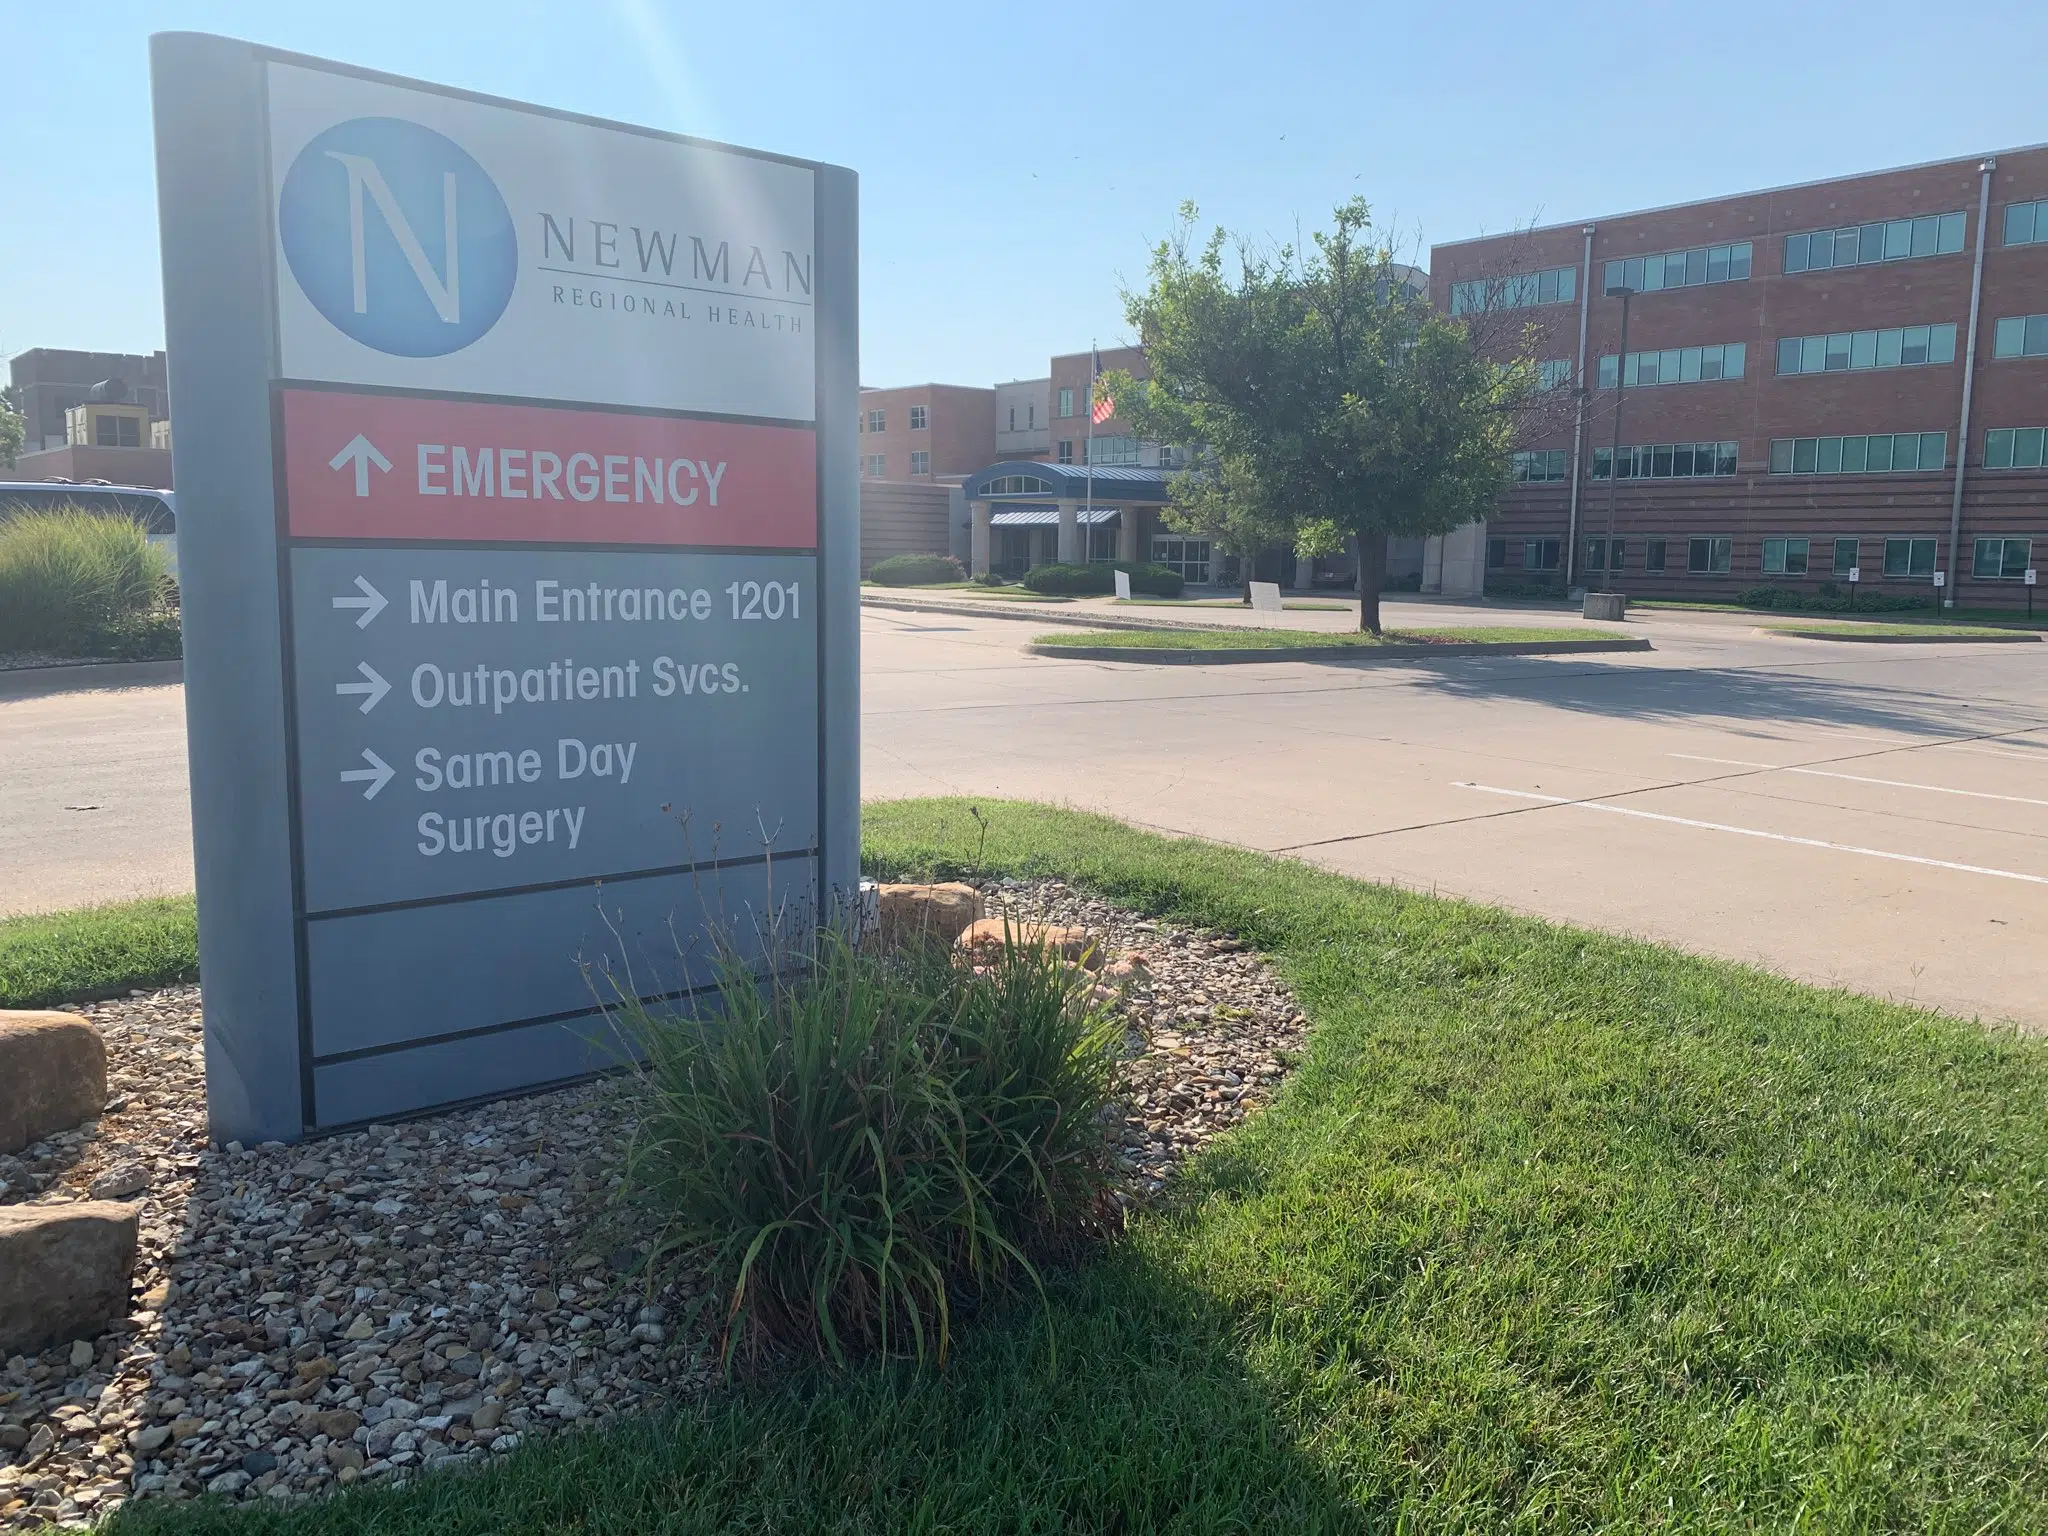 Nurse recruitment effort continues at Newman Regional Health